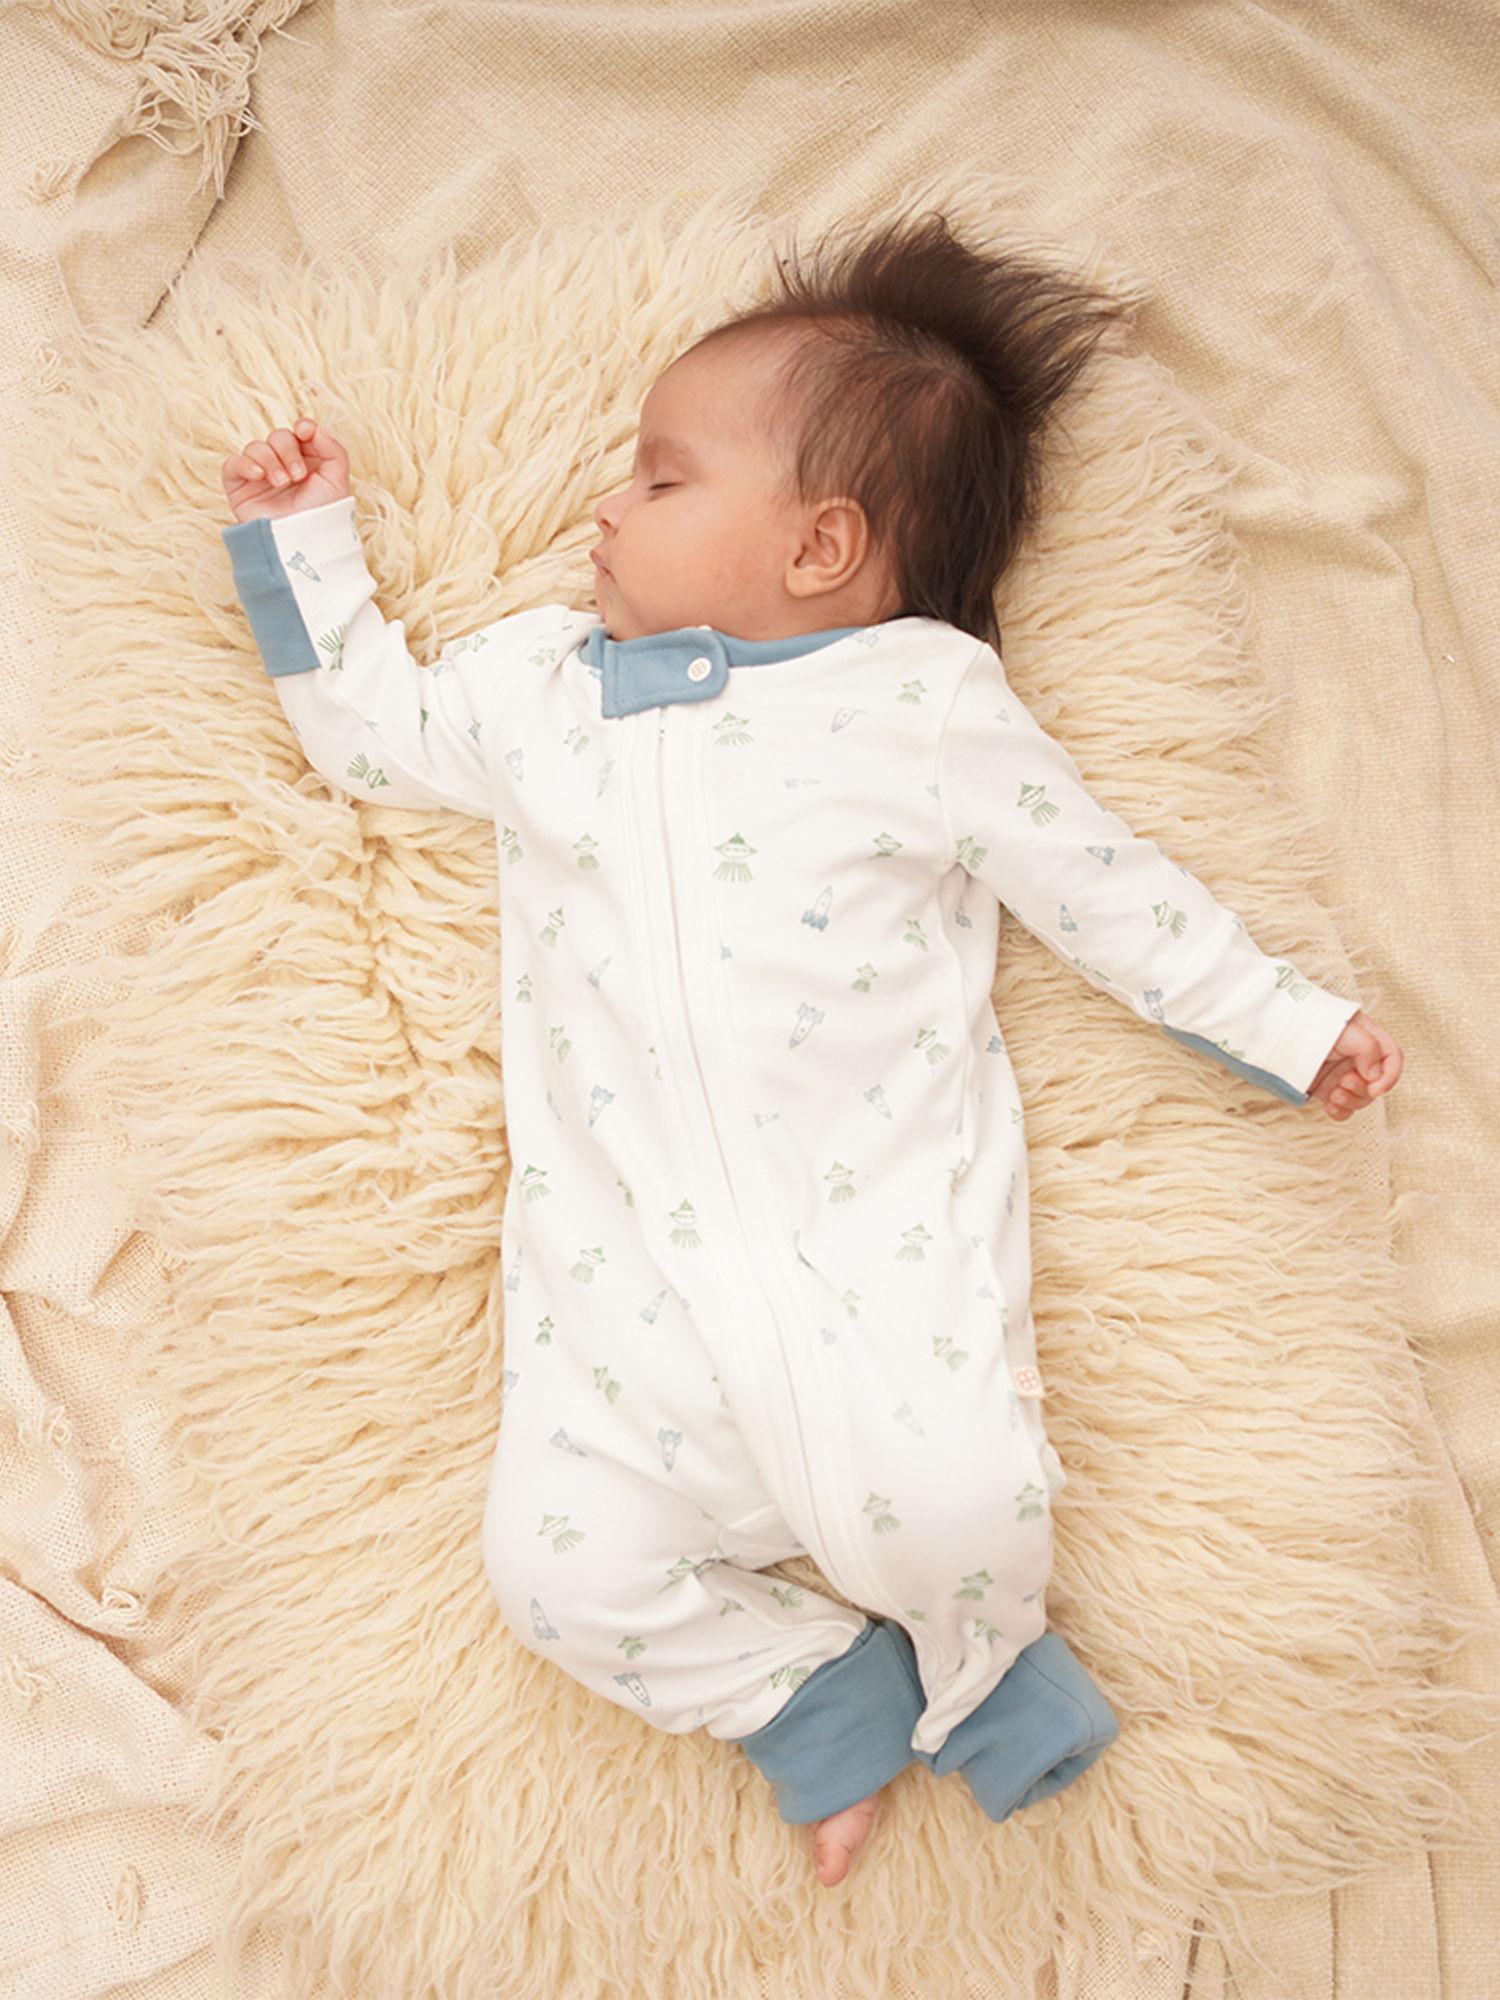 organic cotton unisex baby white printed zipper sleepsuit, romper, nightsuit - pack of 1